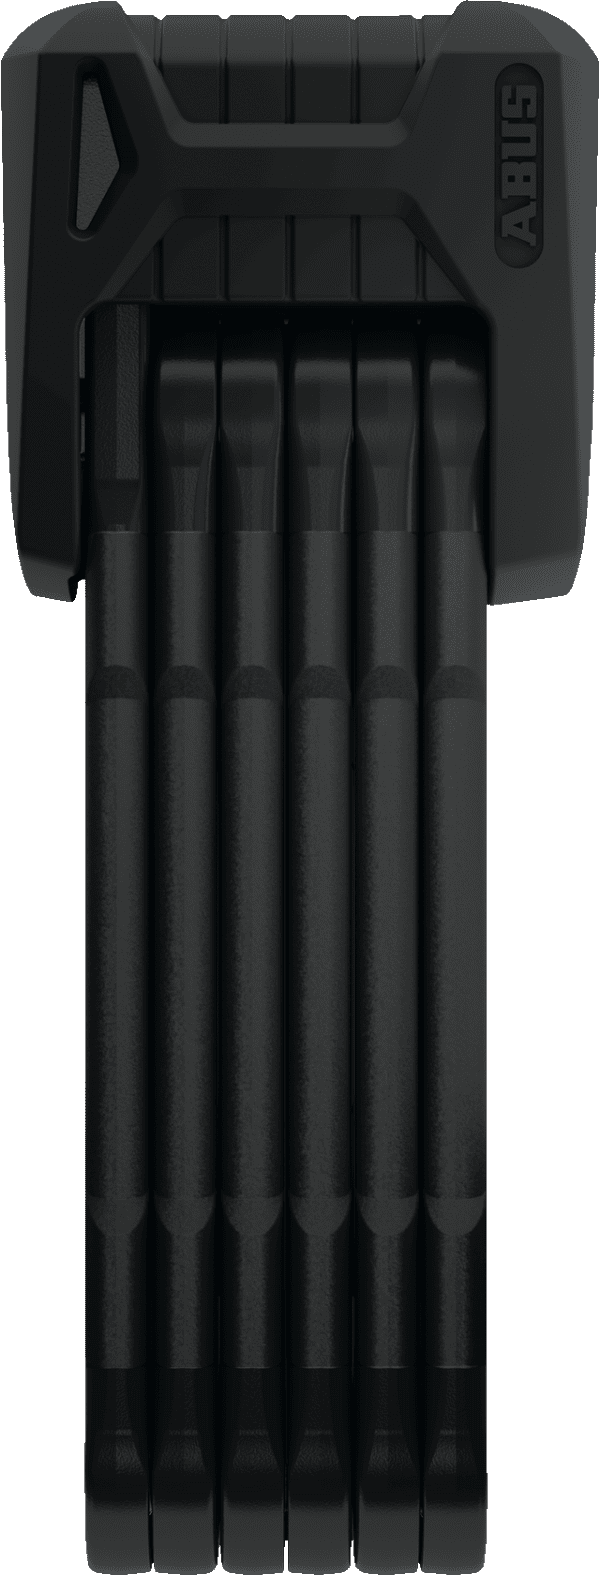 Abus Bordo GranitX-Plus 6500 schwarz